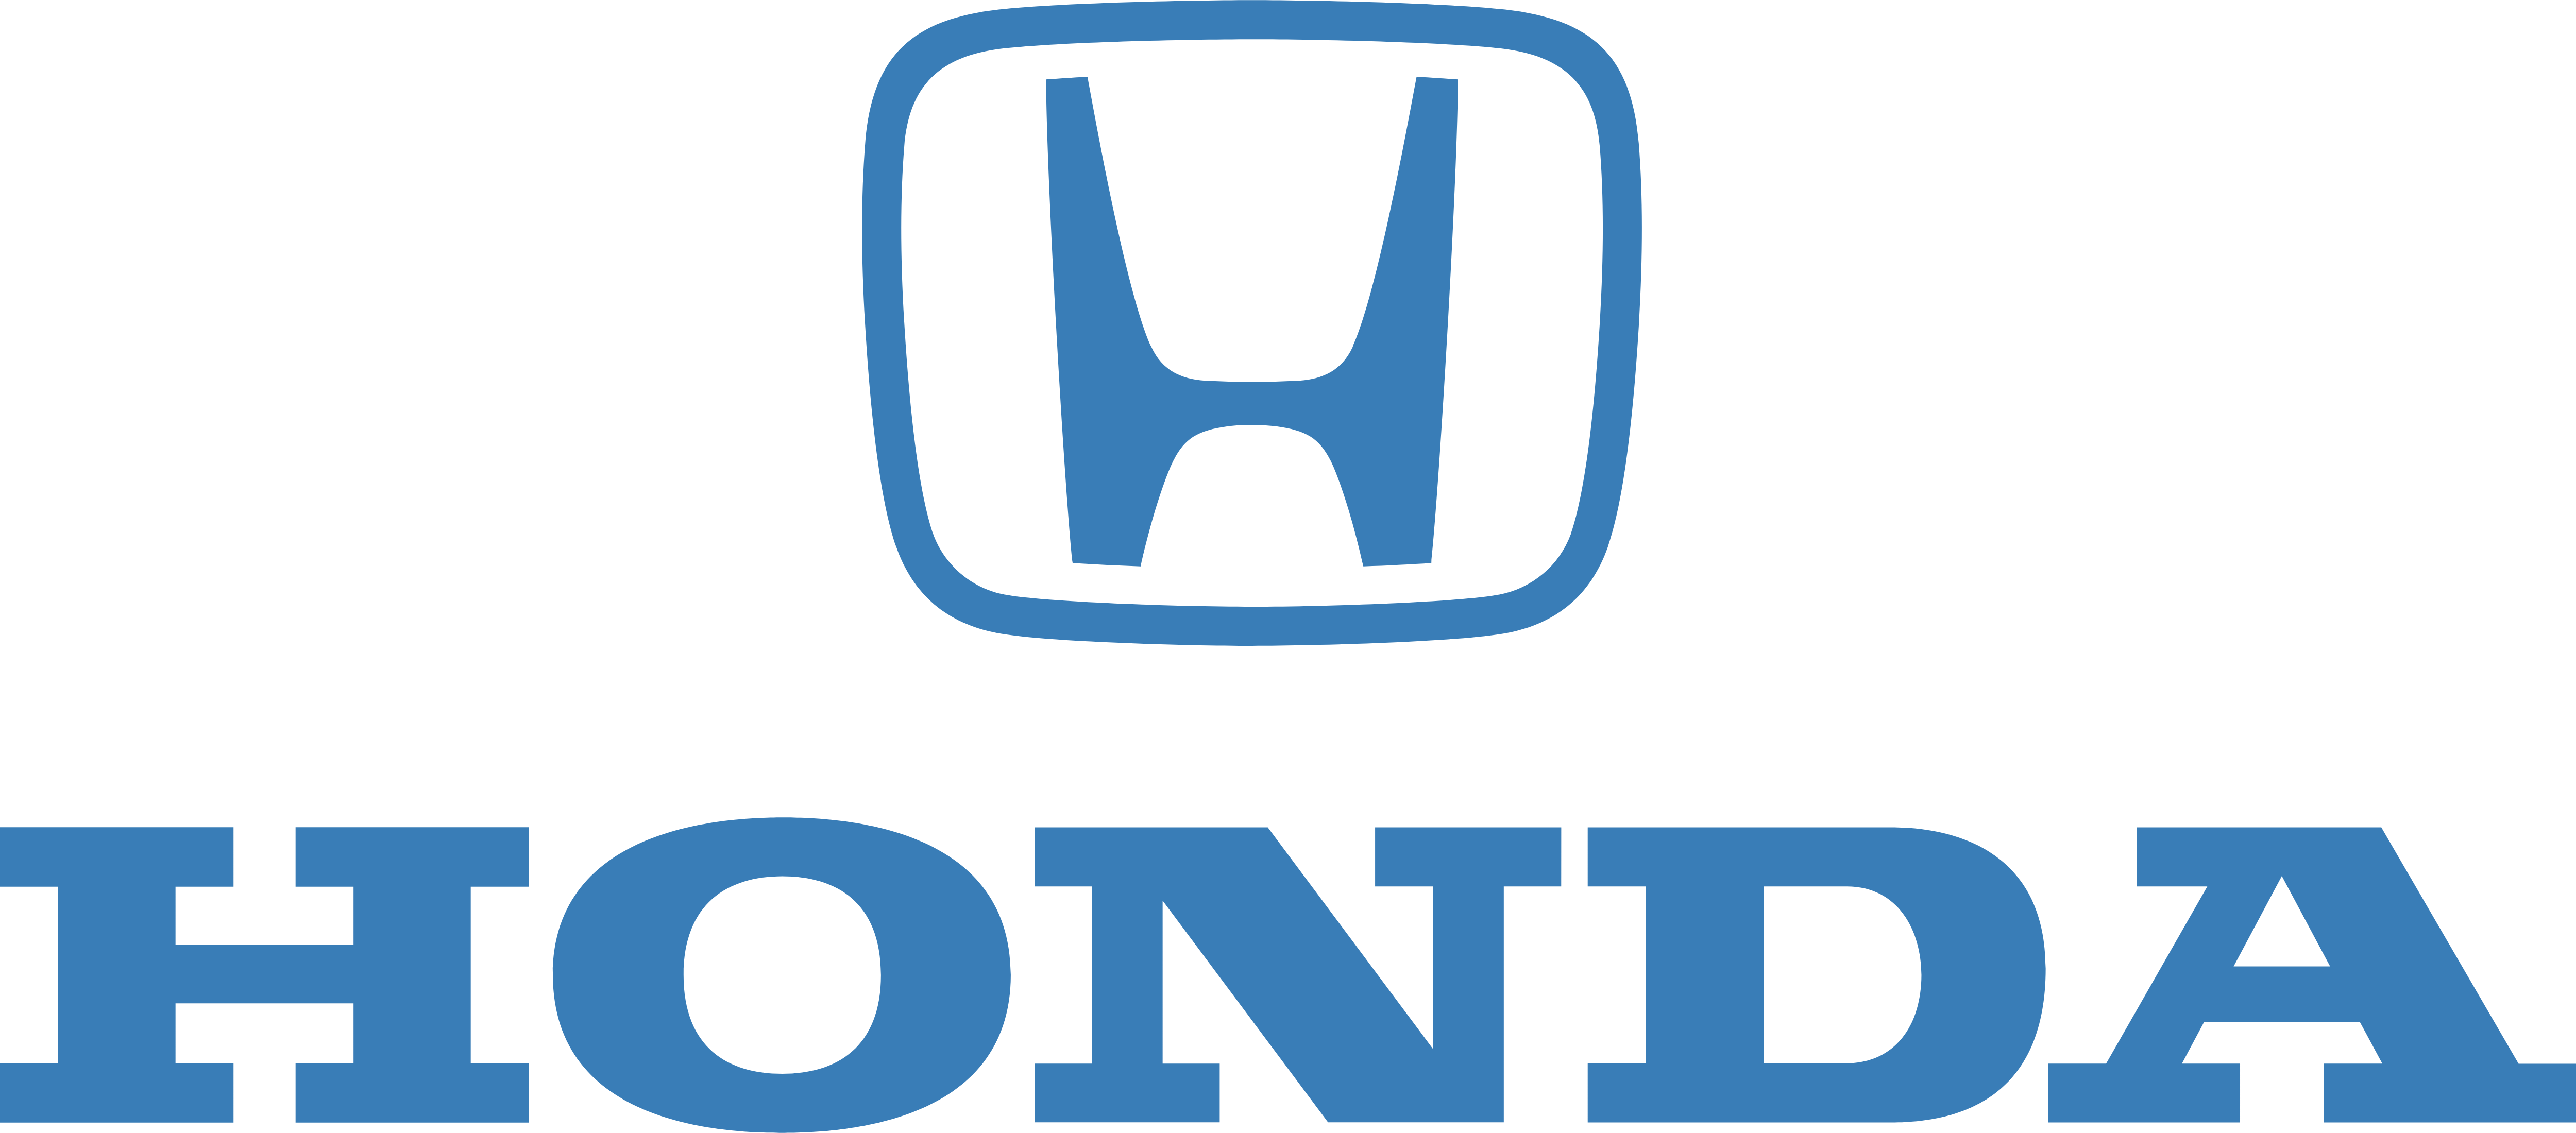 blue honda logos download 32841